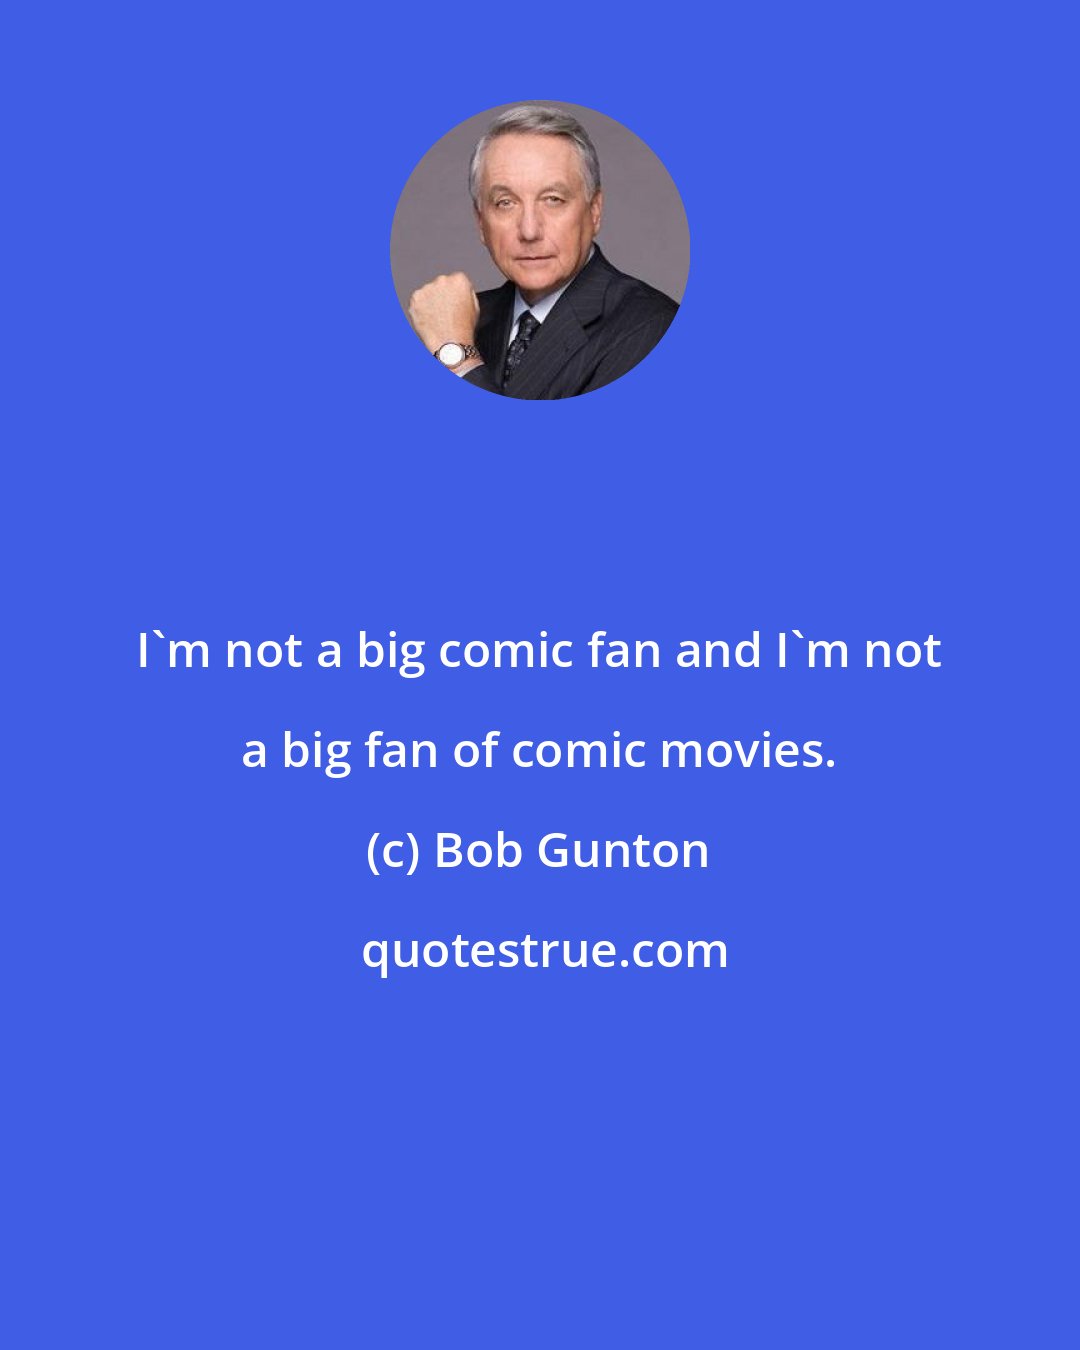 Bob Gunton: I'm not a big comic fan and I'm not a big fan of comic movies.